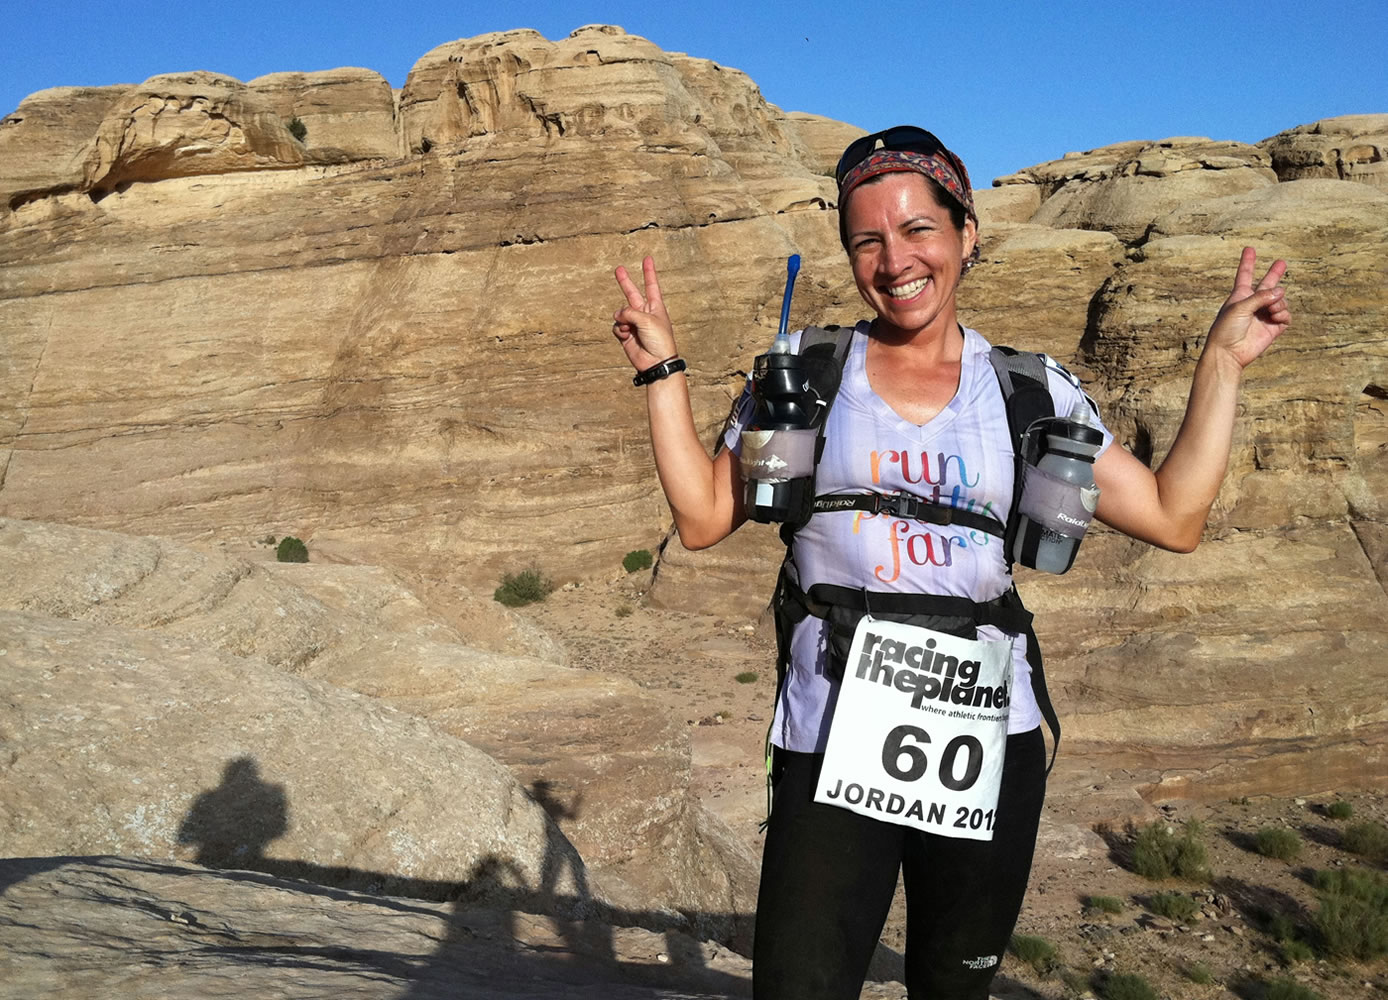 Jennifer Hughes ran 160 miles across the desert in Jordan this year.